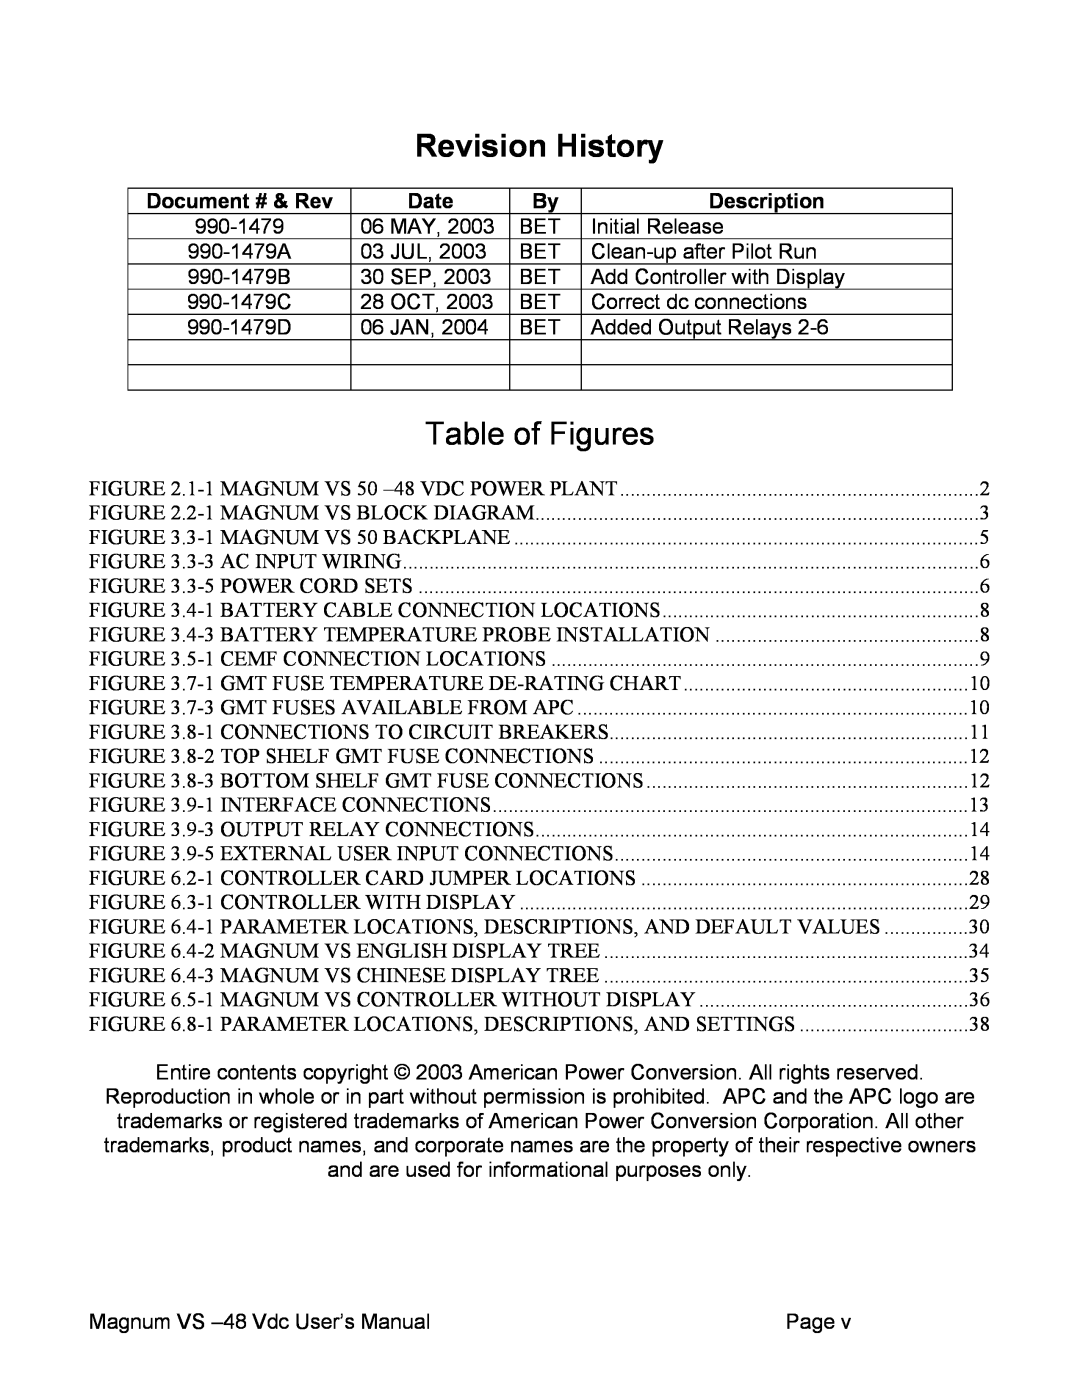 APC VS 50, VS 100 user manual Revision History, Table of Figures, Document # & Rev, Date, Description 